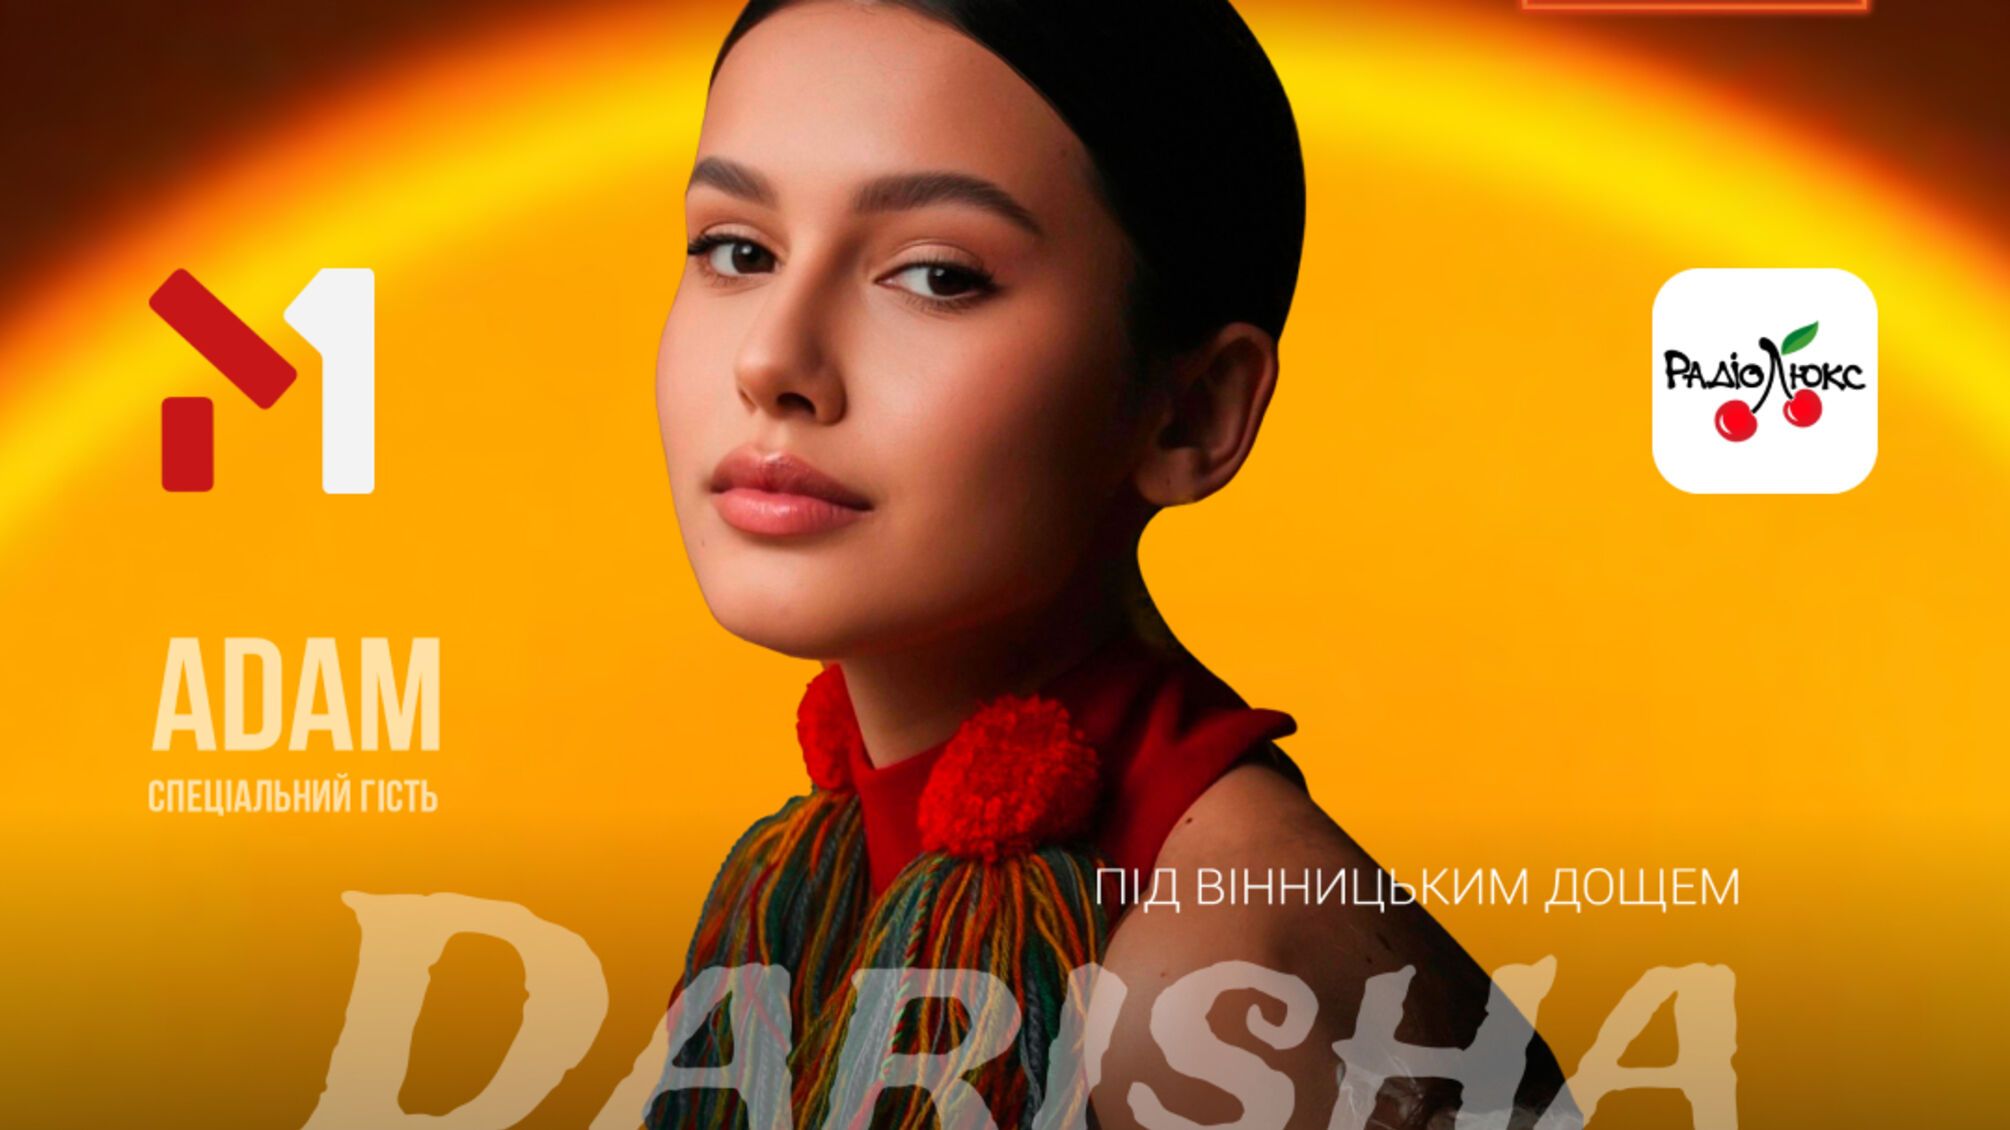 певица Darisha